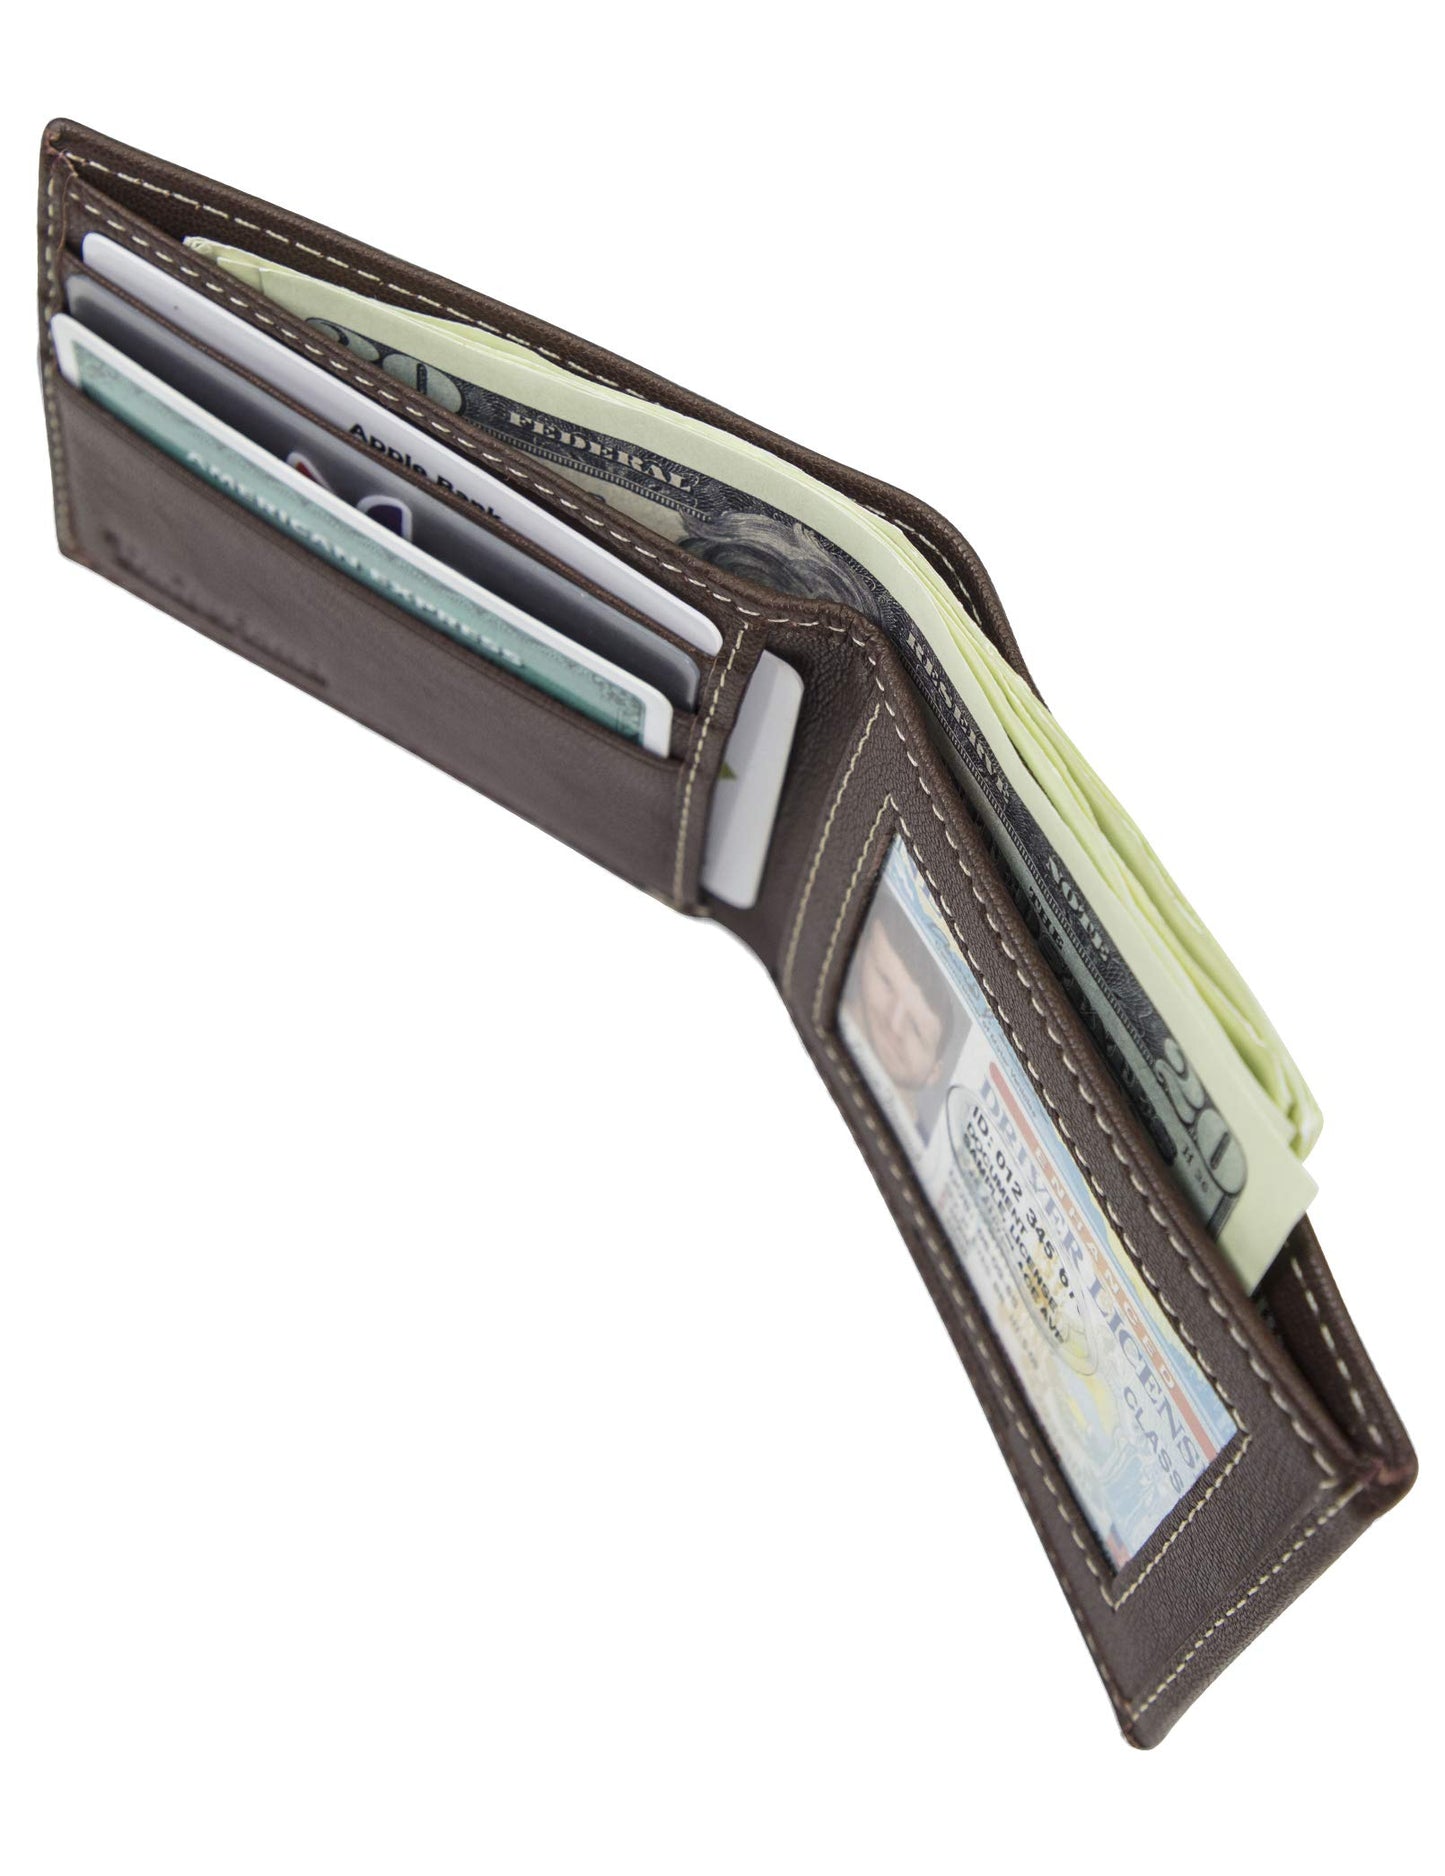 Timberland Men's Sportz Quad Leather Passcase Wallet, 3 H x 4 L Inches